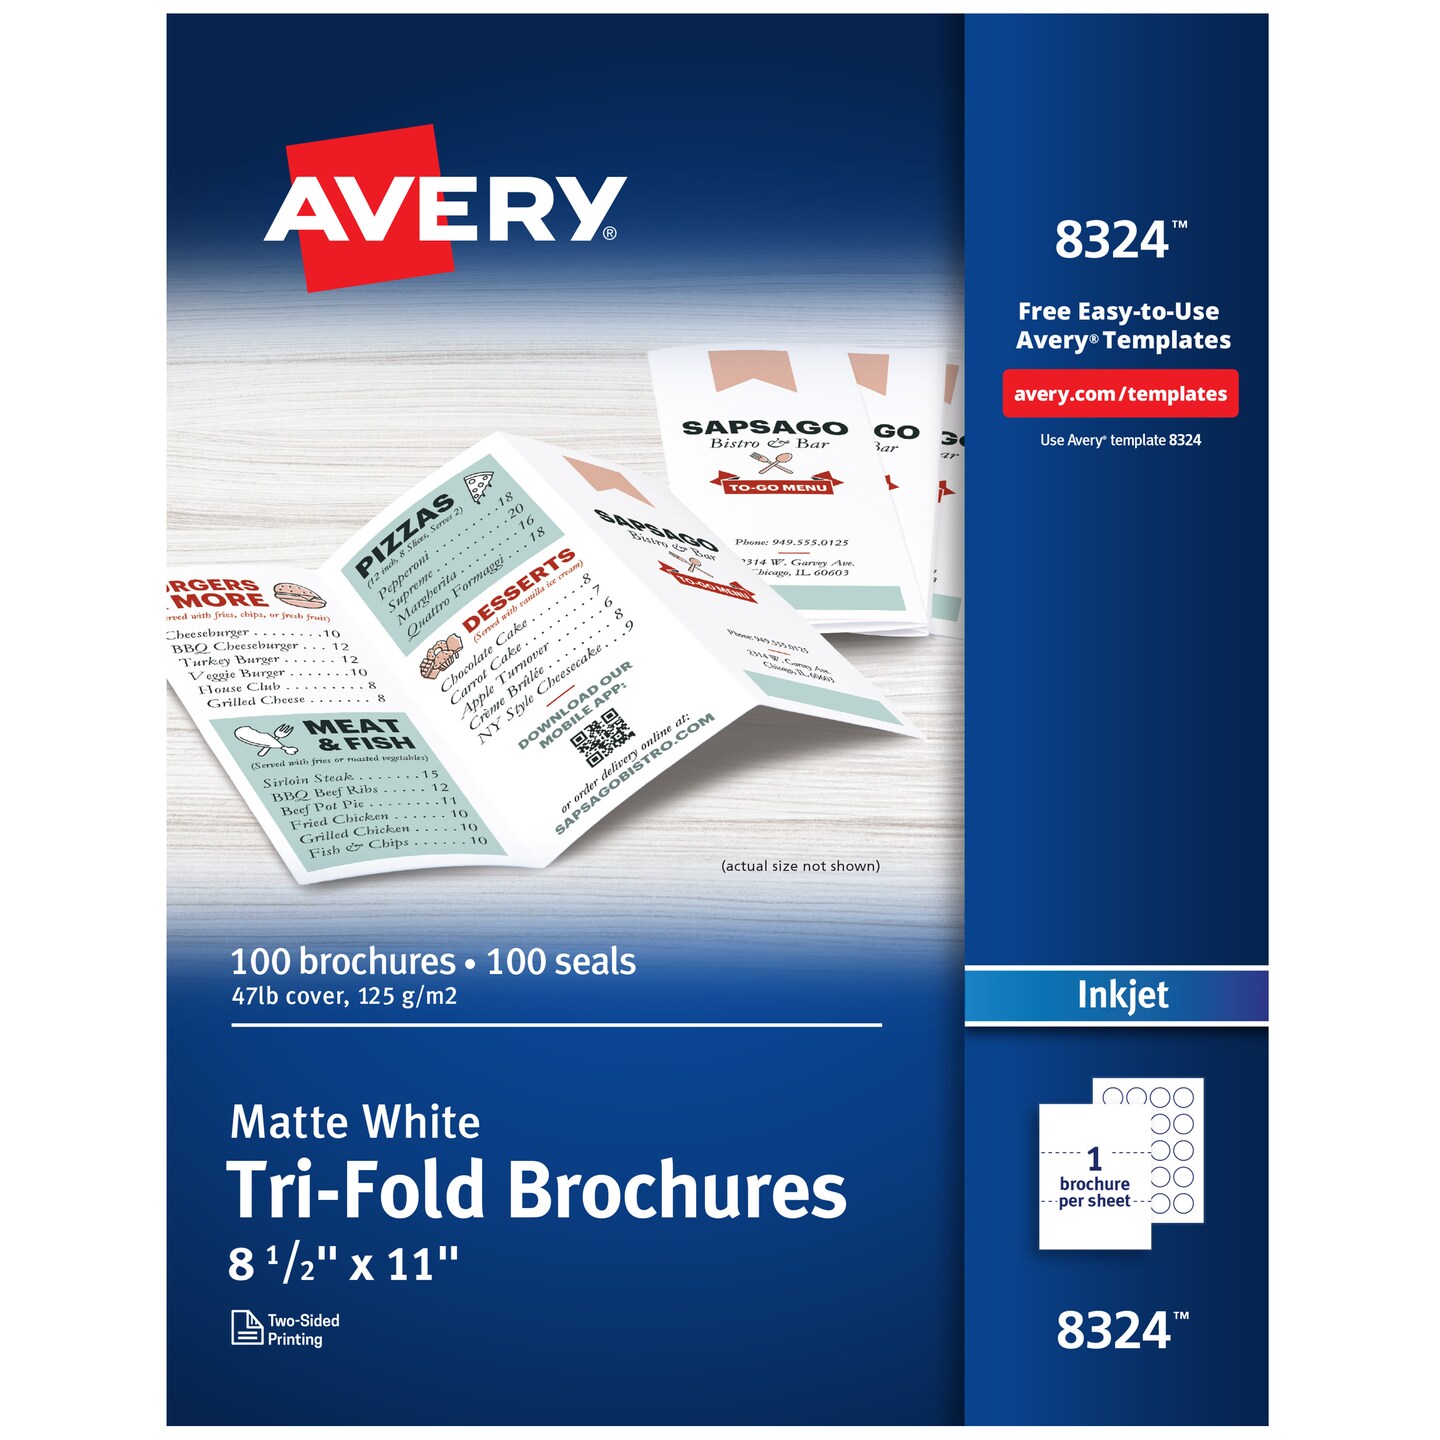 Avery Printable Sticker Paper, 8.5 x 11, Inkjet Printer, White